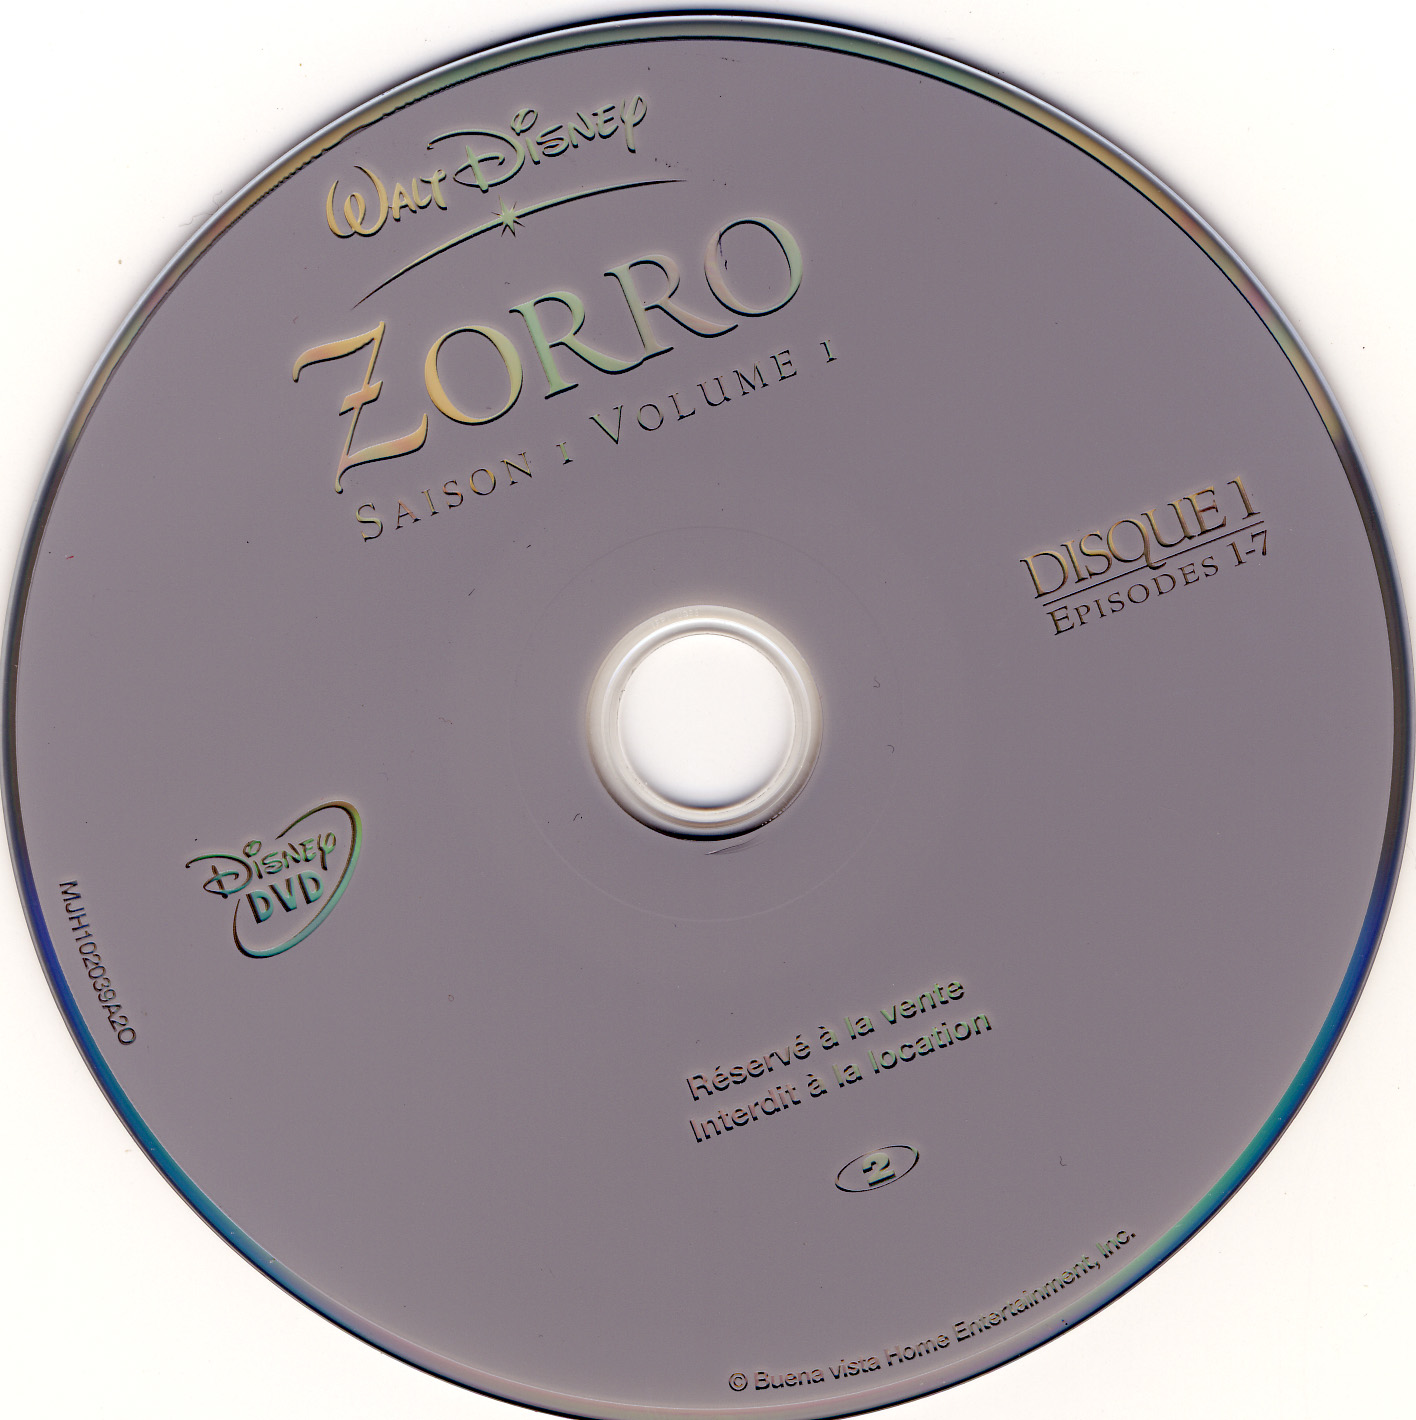 Zorro Saison 1 vol 1 DISC 1